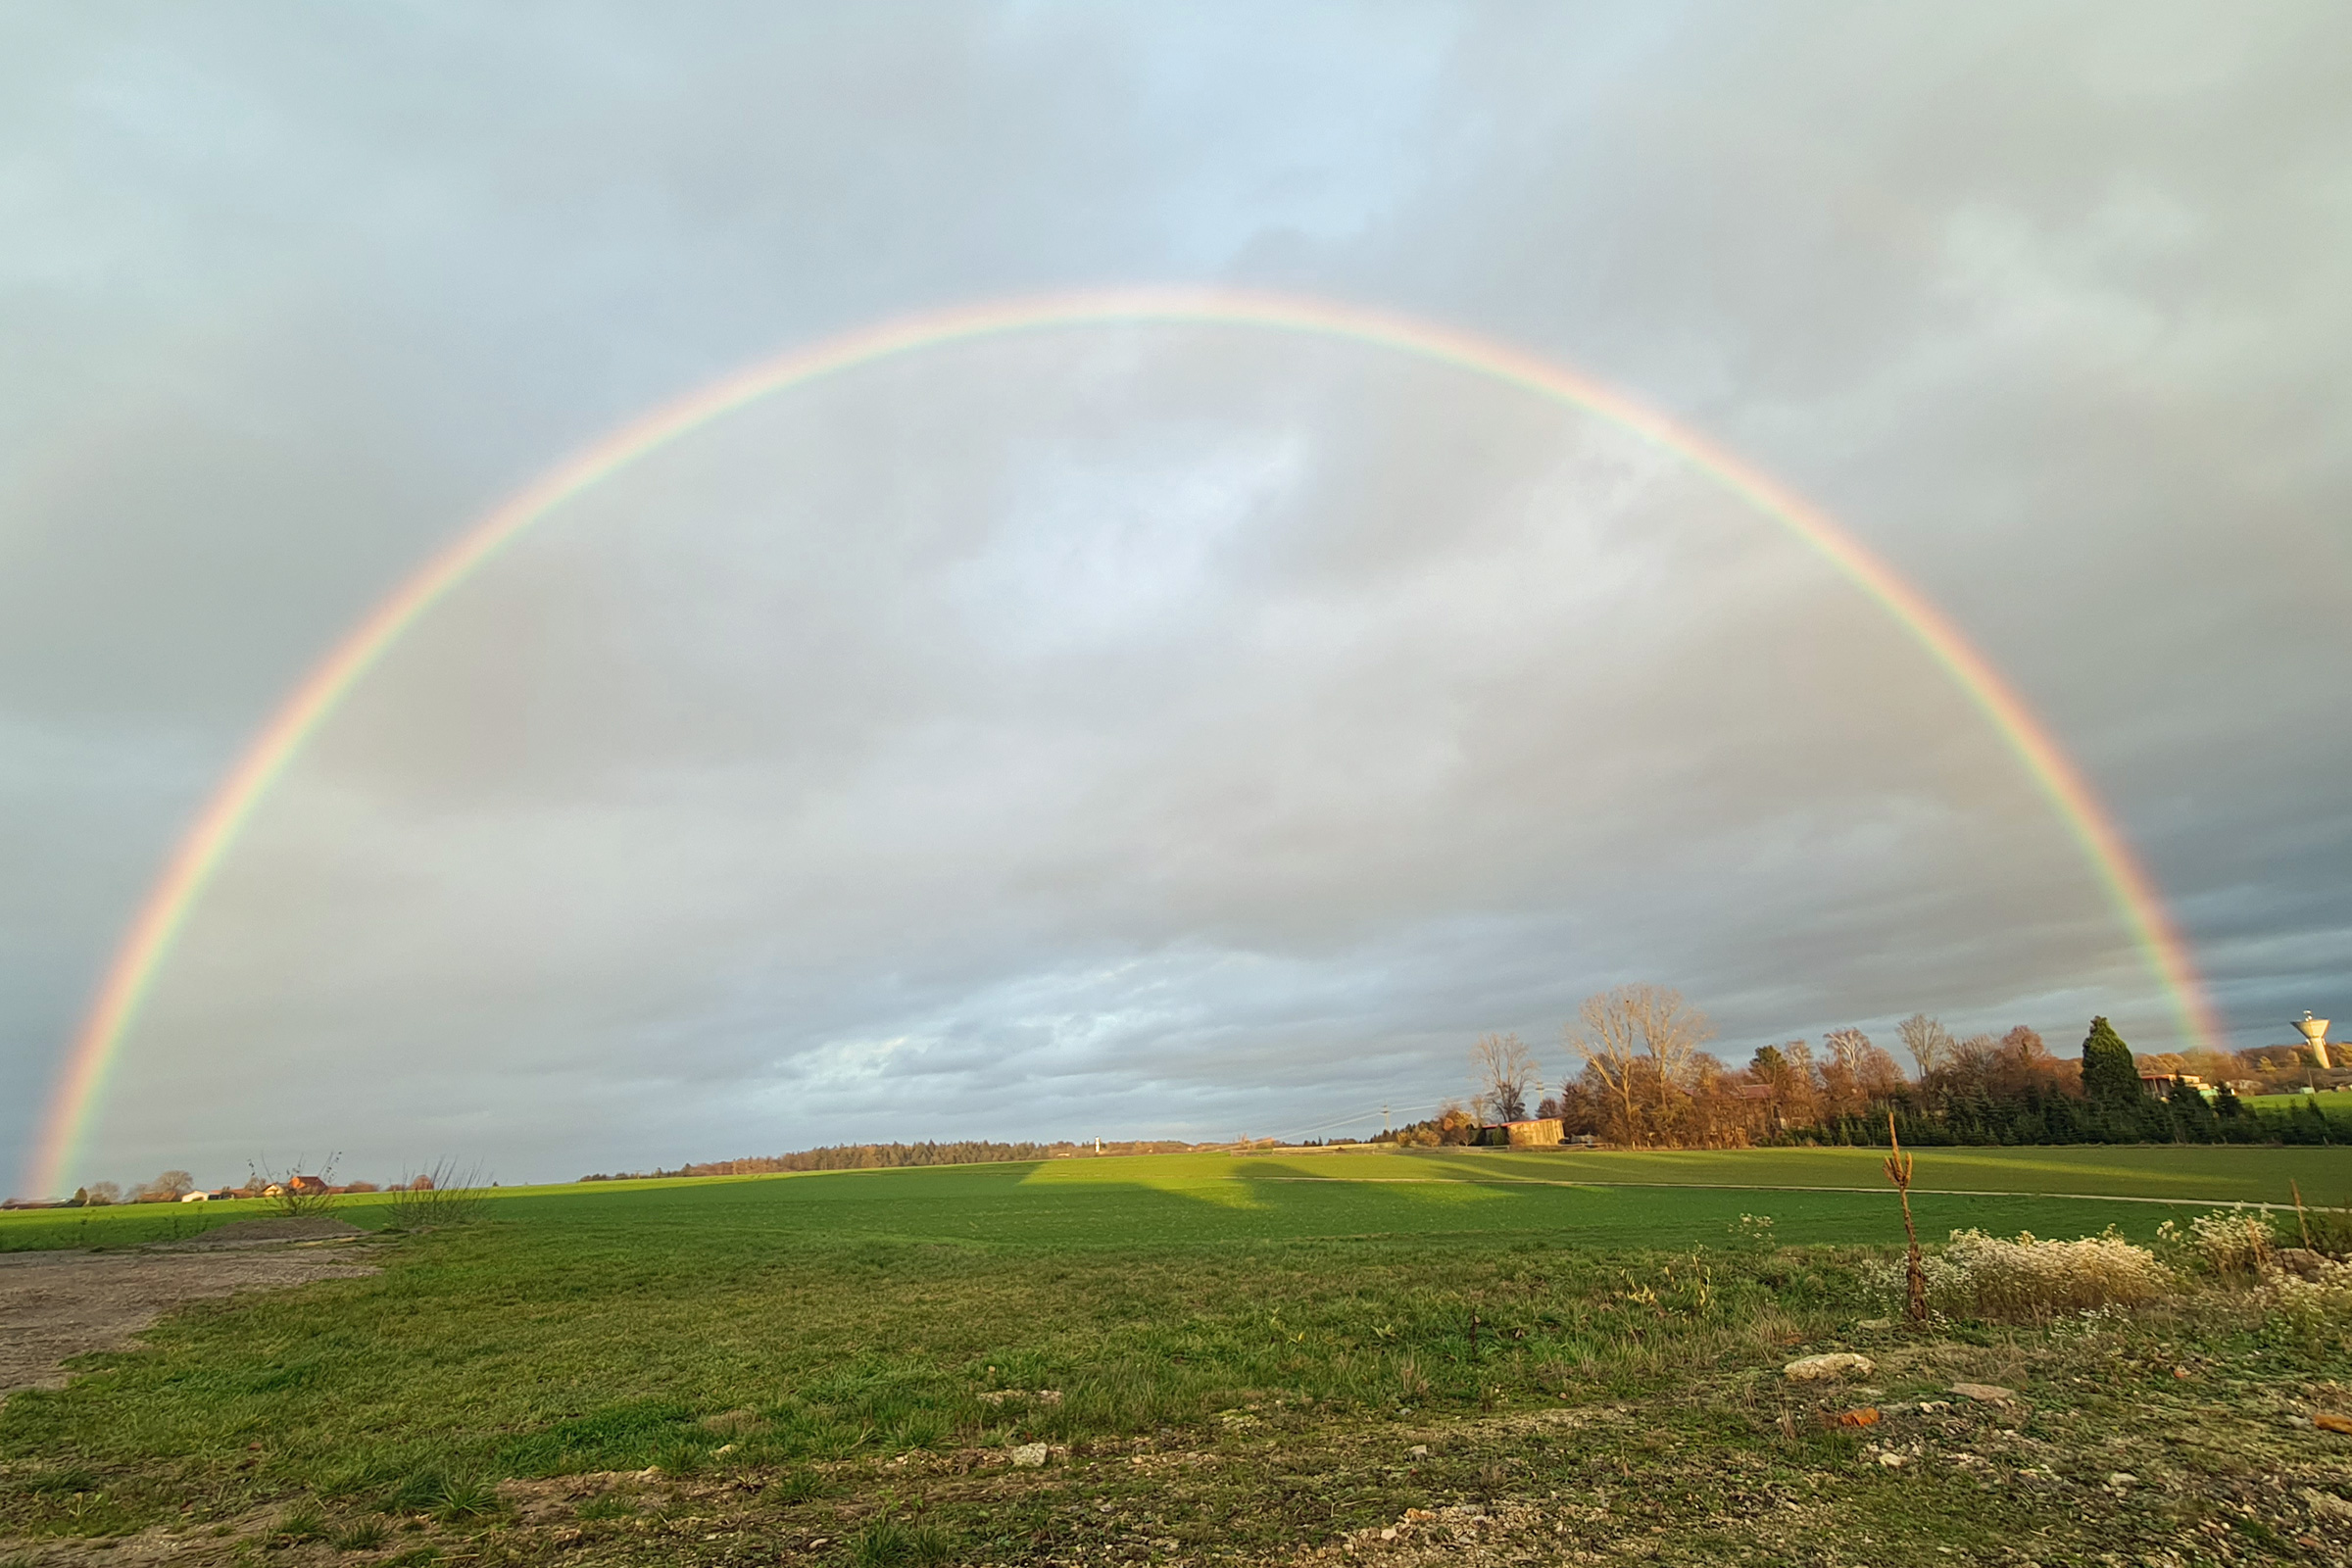 Regenbogen über dem Feld